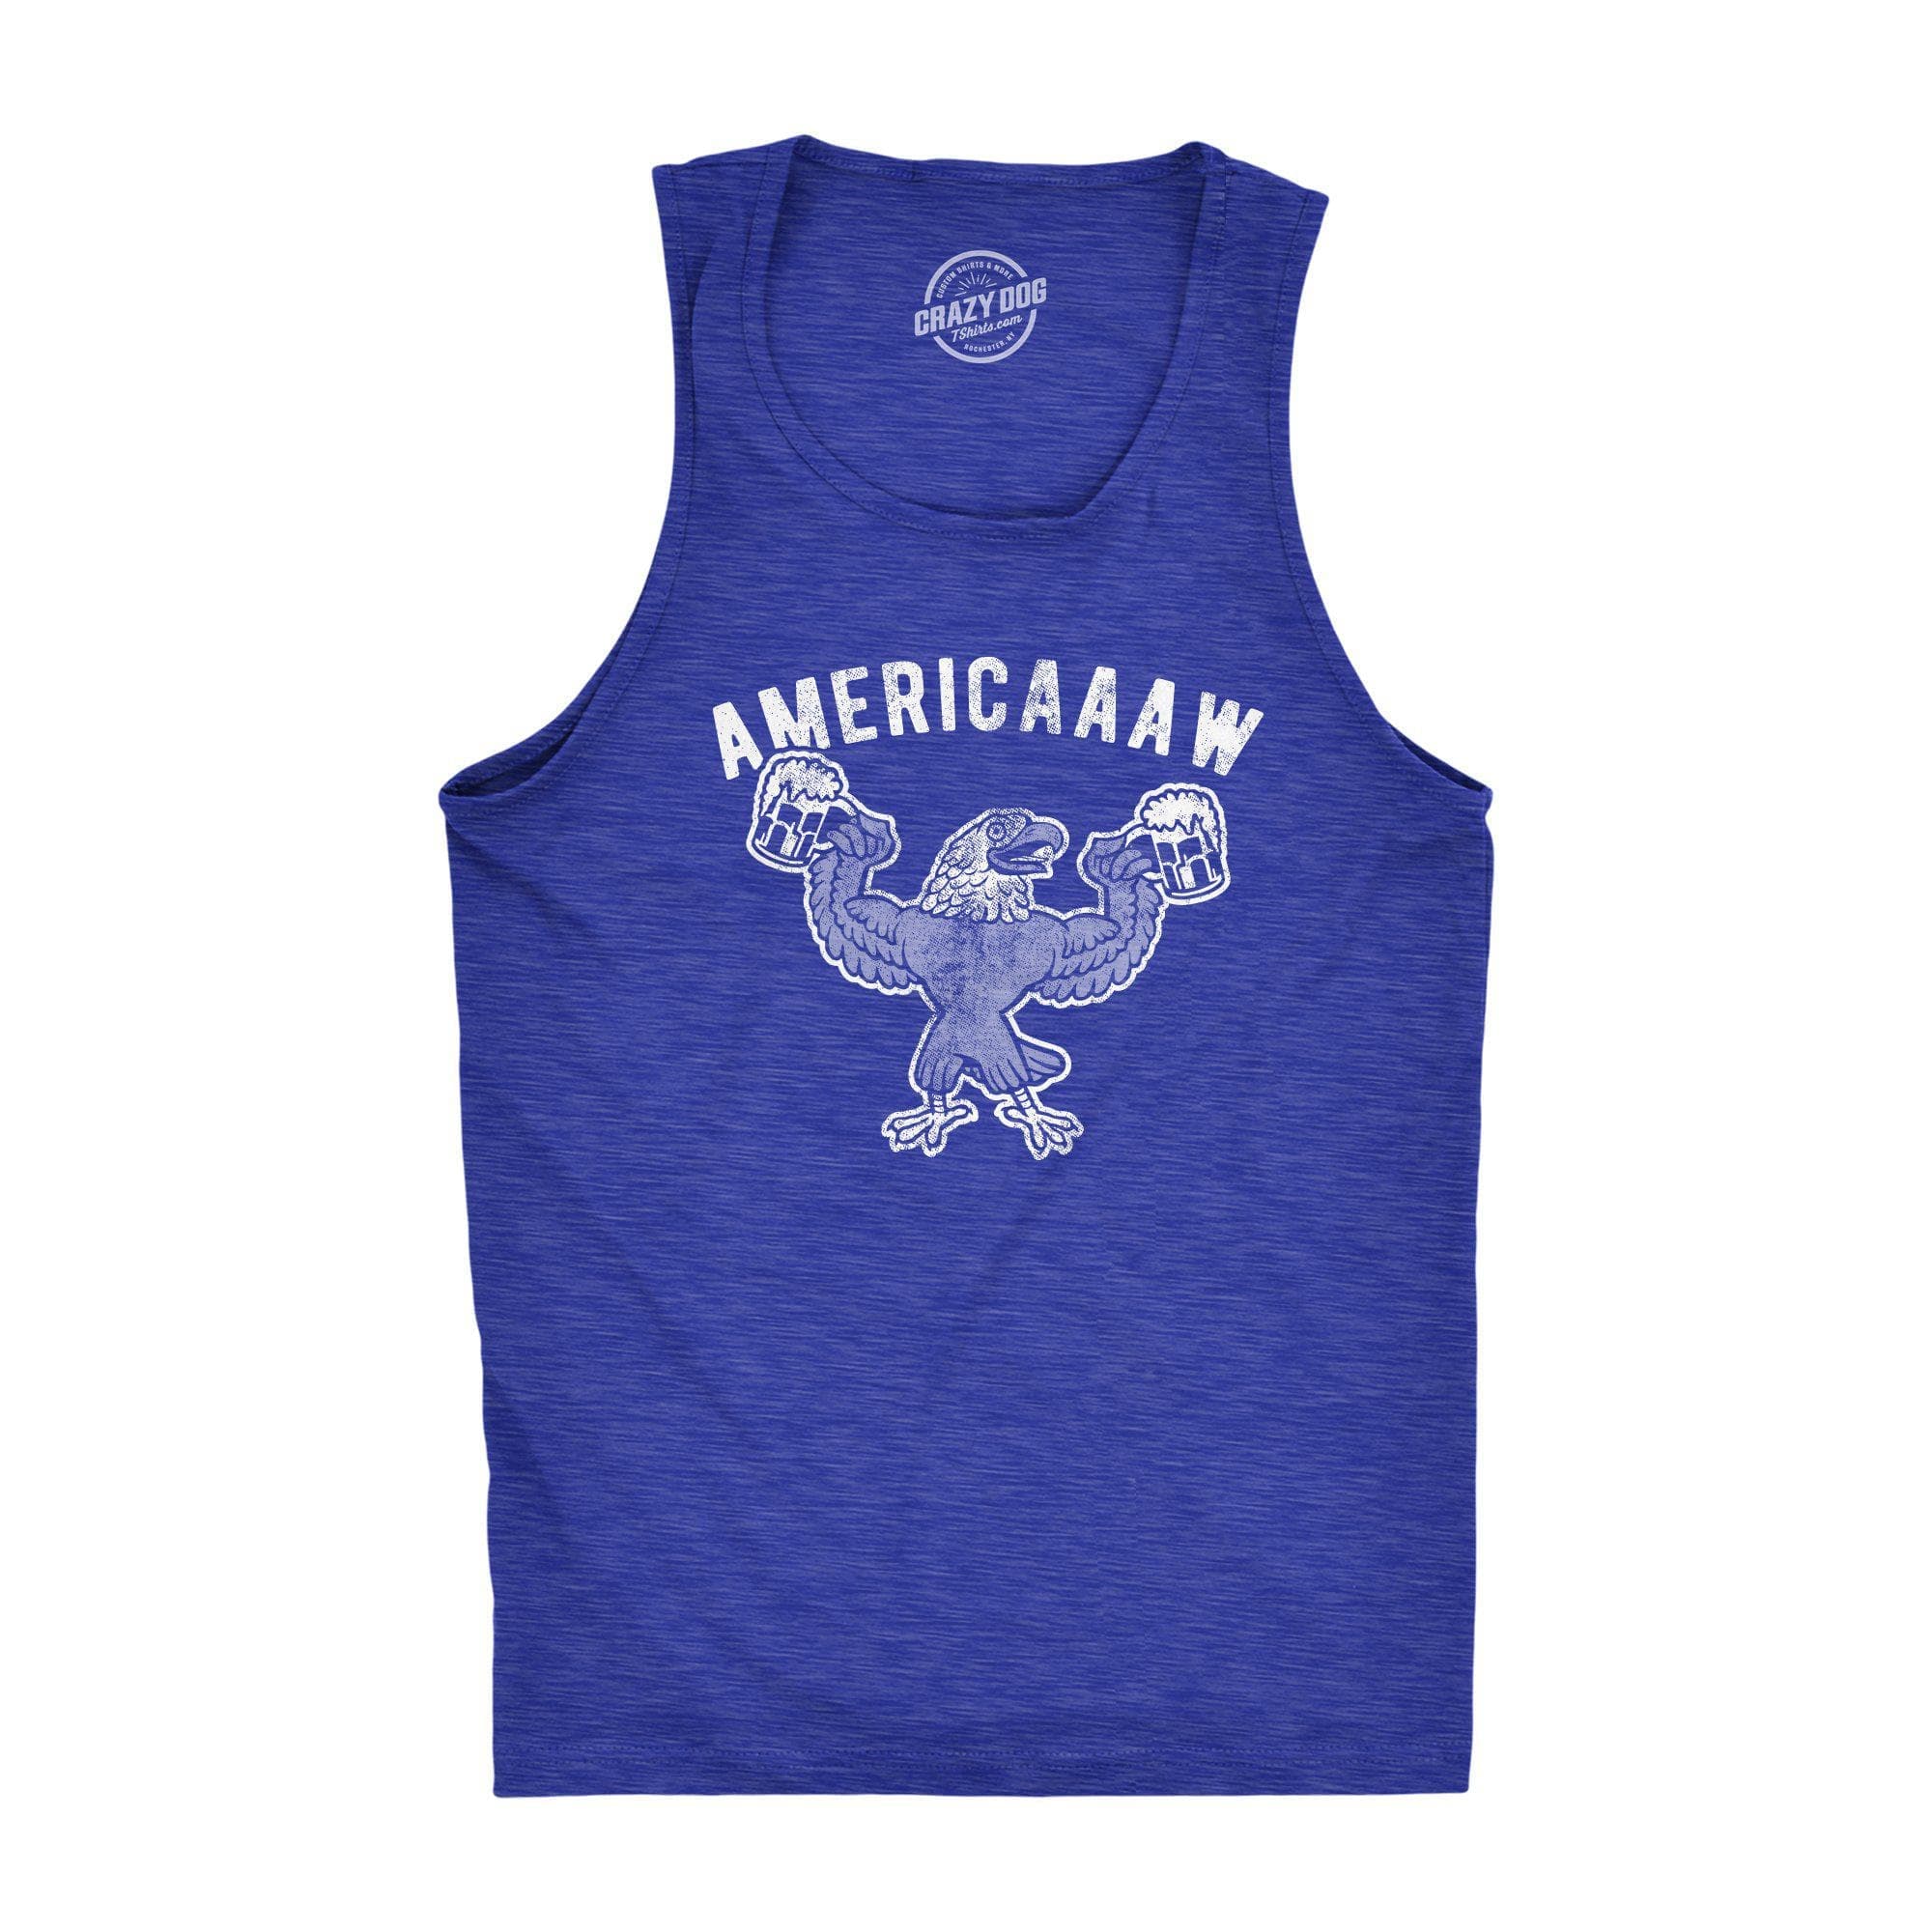 Americaaaw Men's Tank Top - Crazy Dog T-Shirts